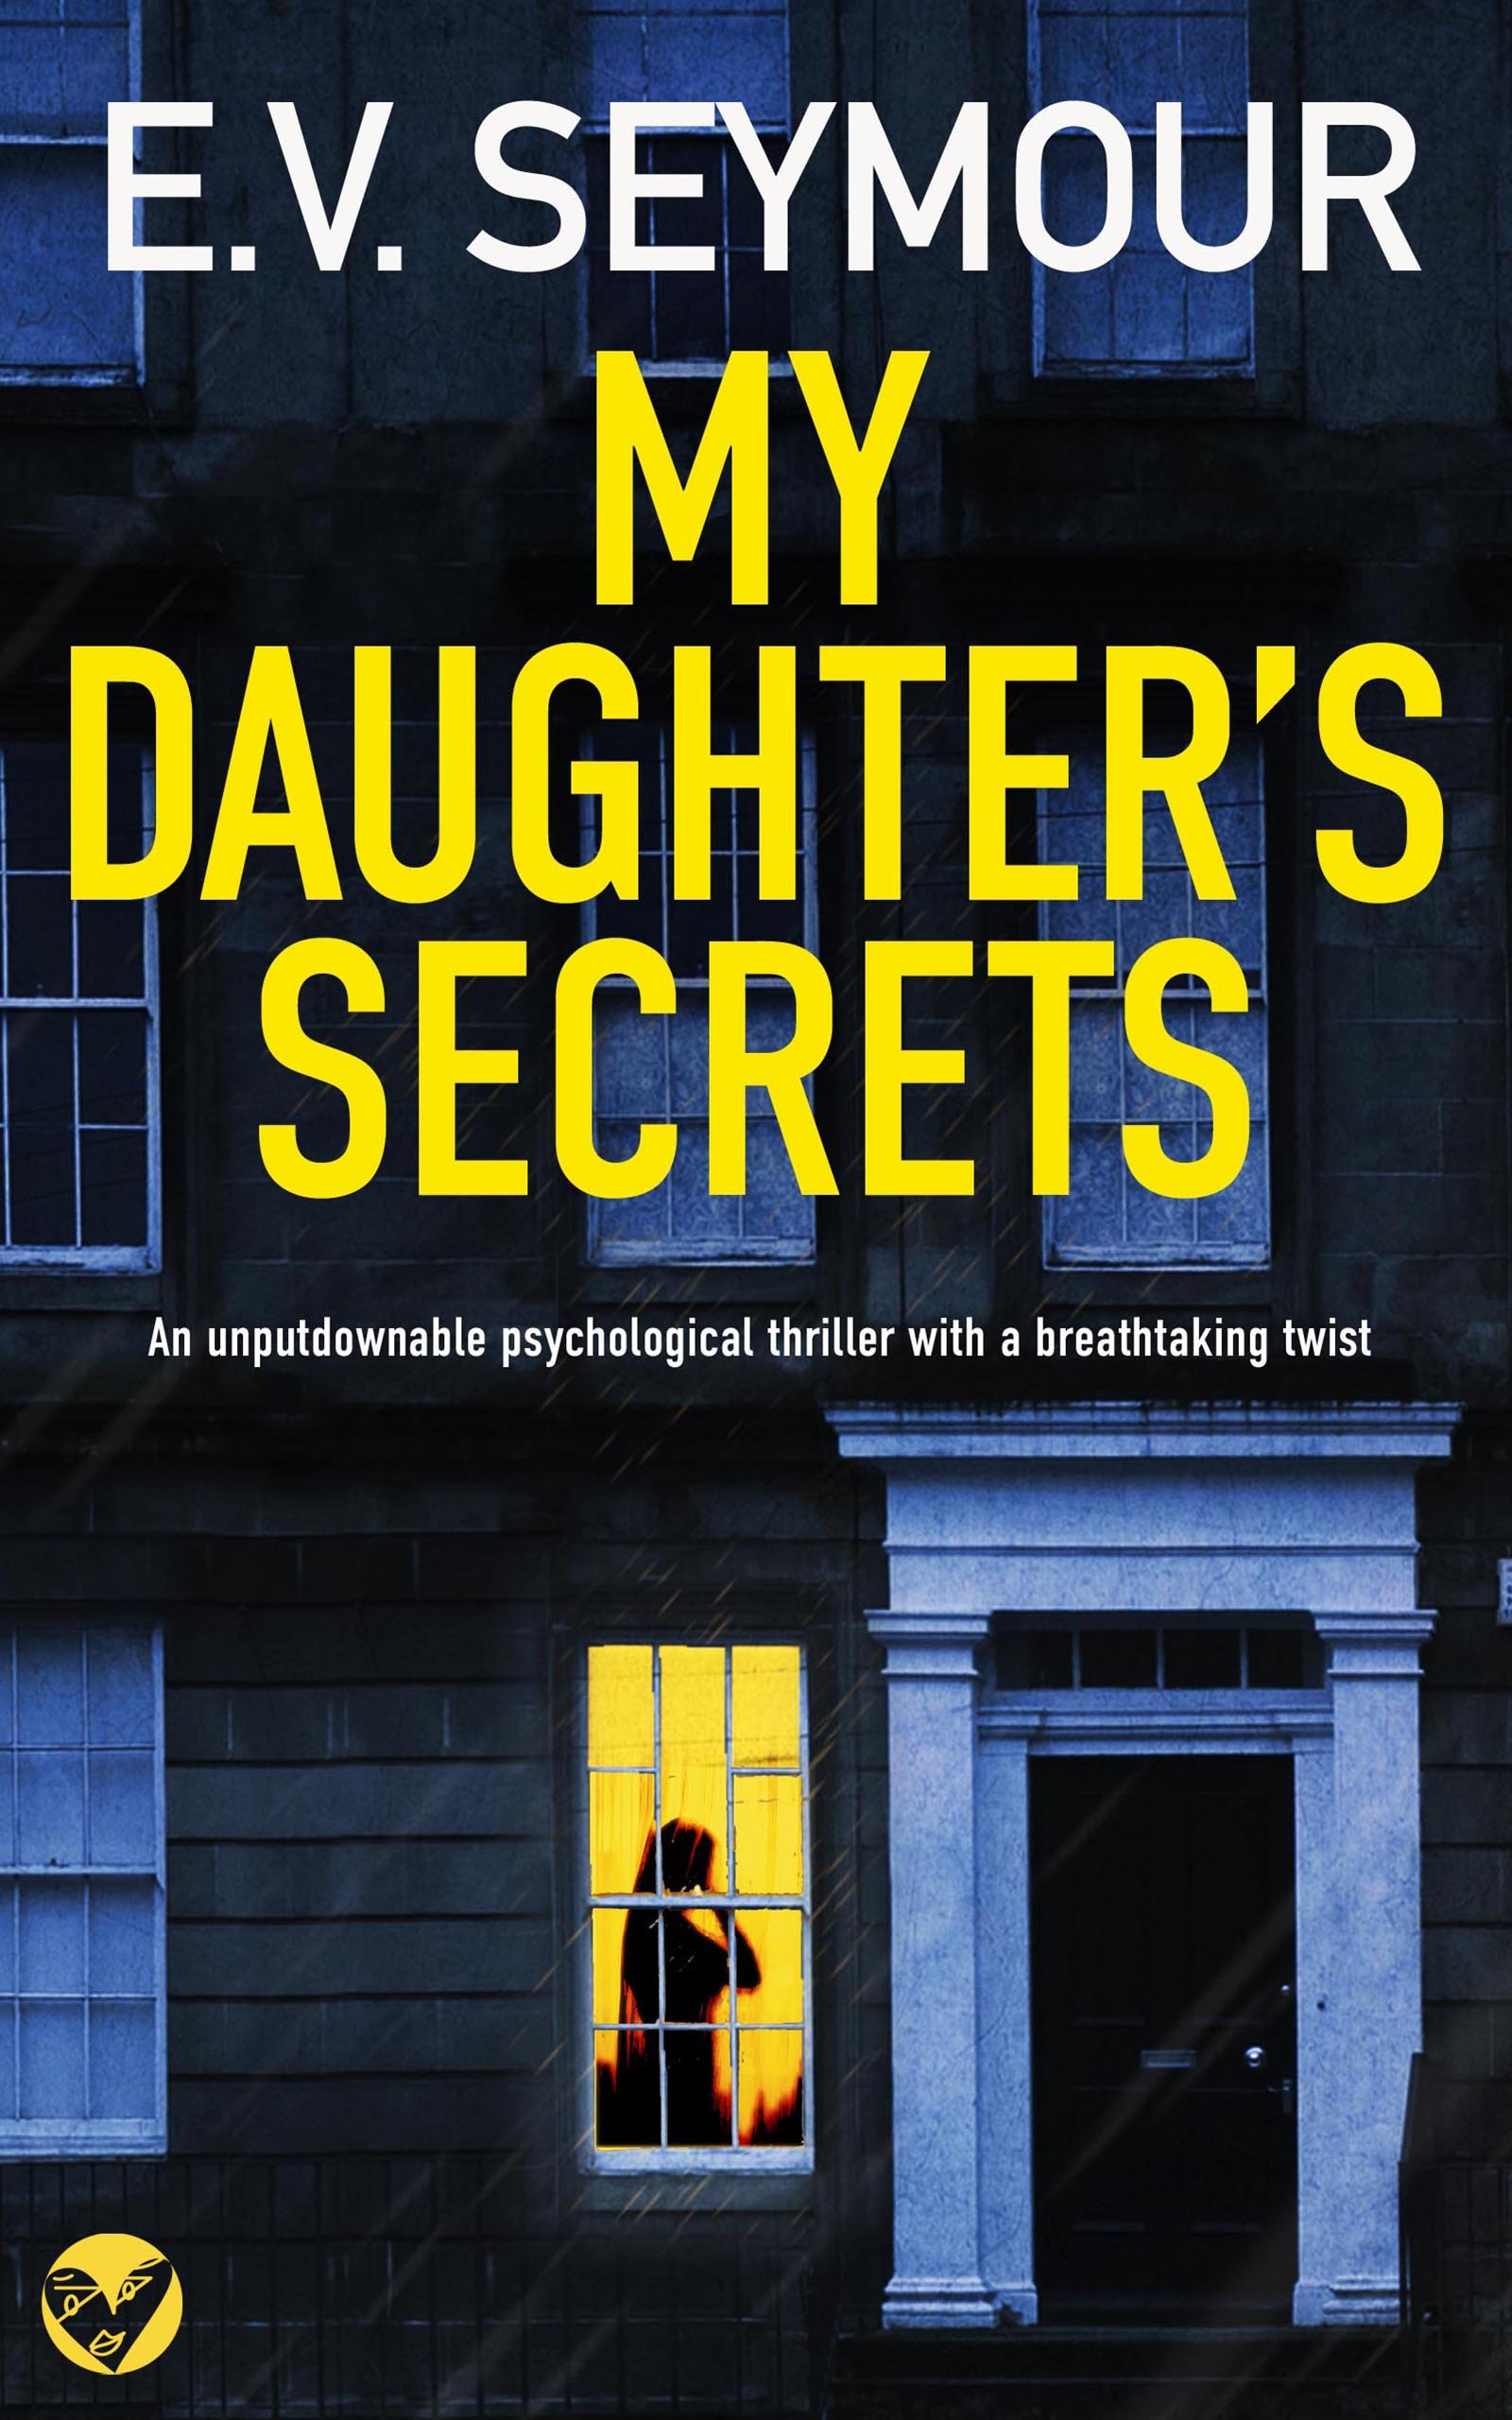 MY DAUGHTER'S SECRETS Cover publish.jpg